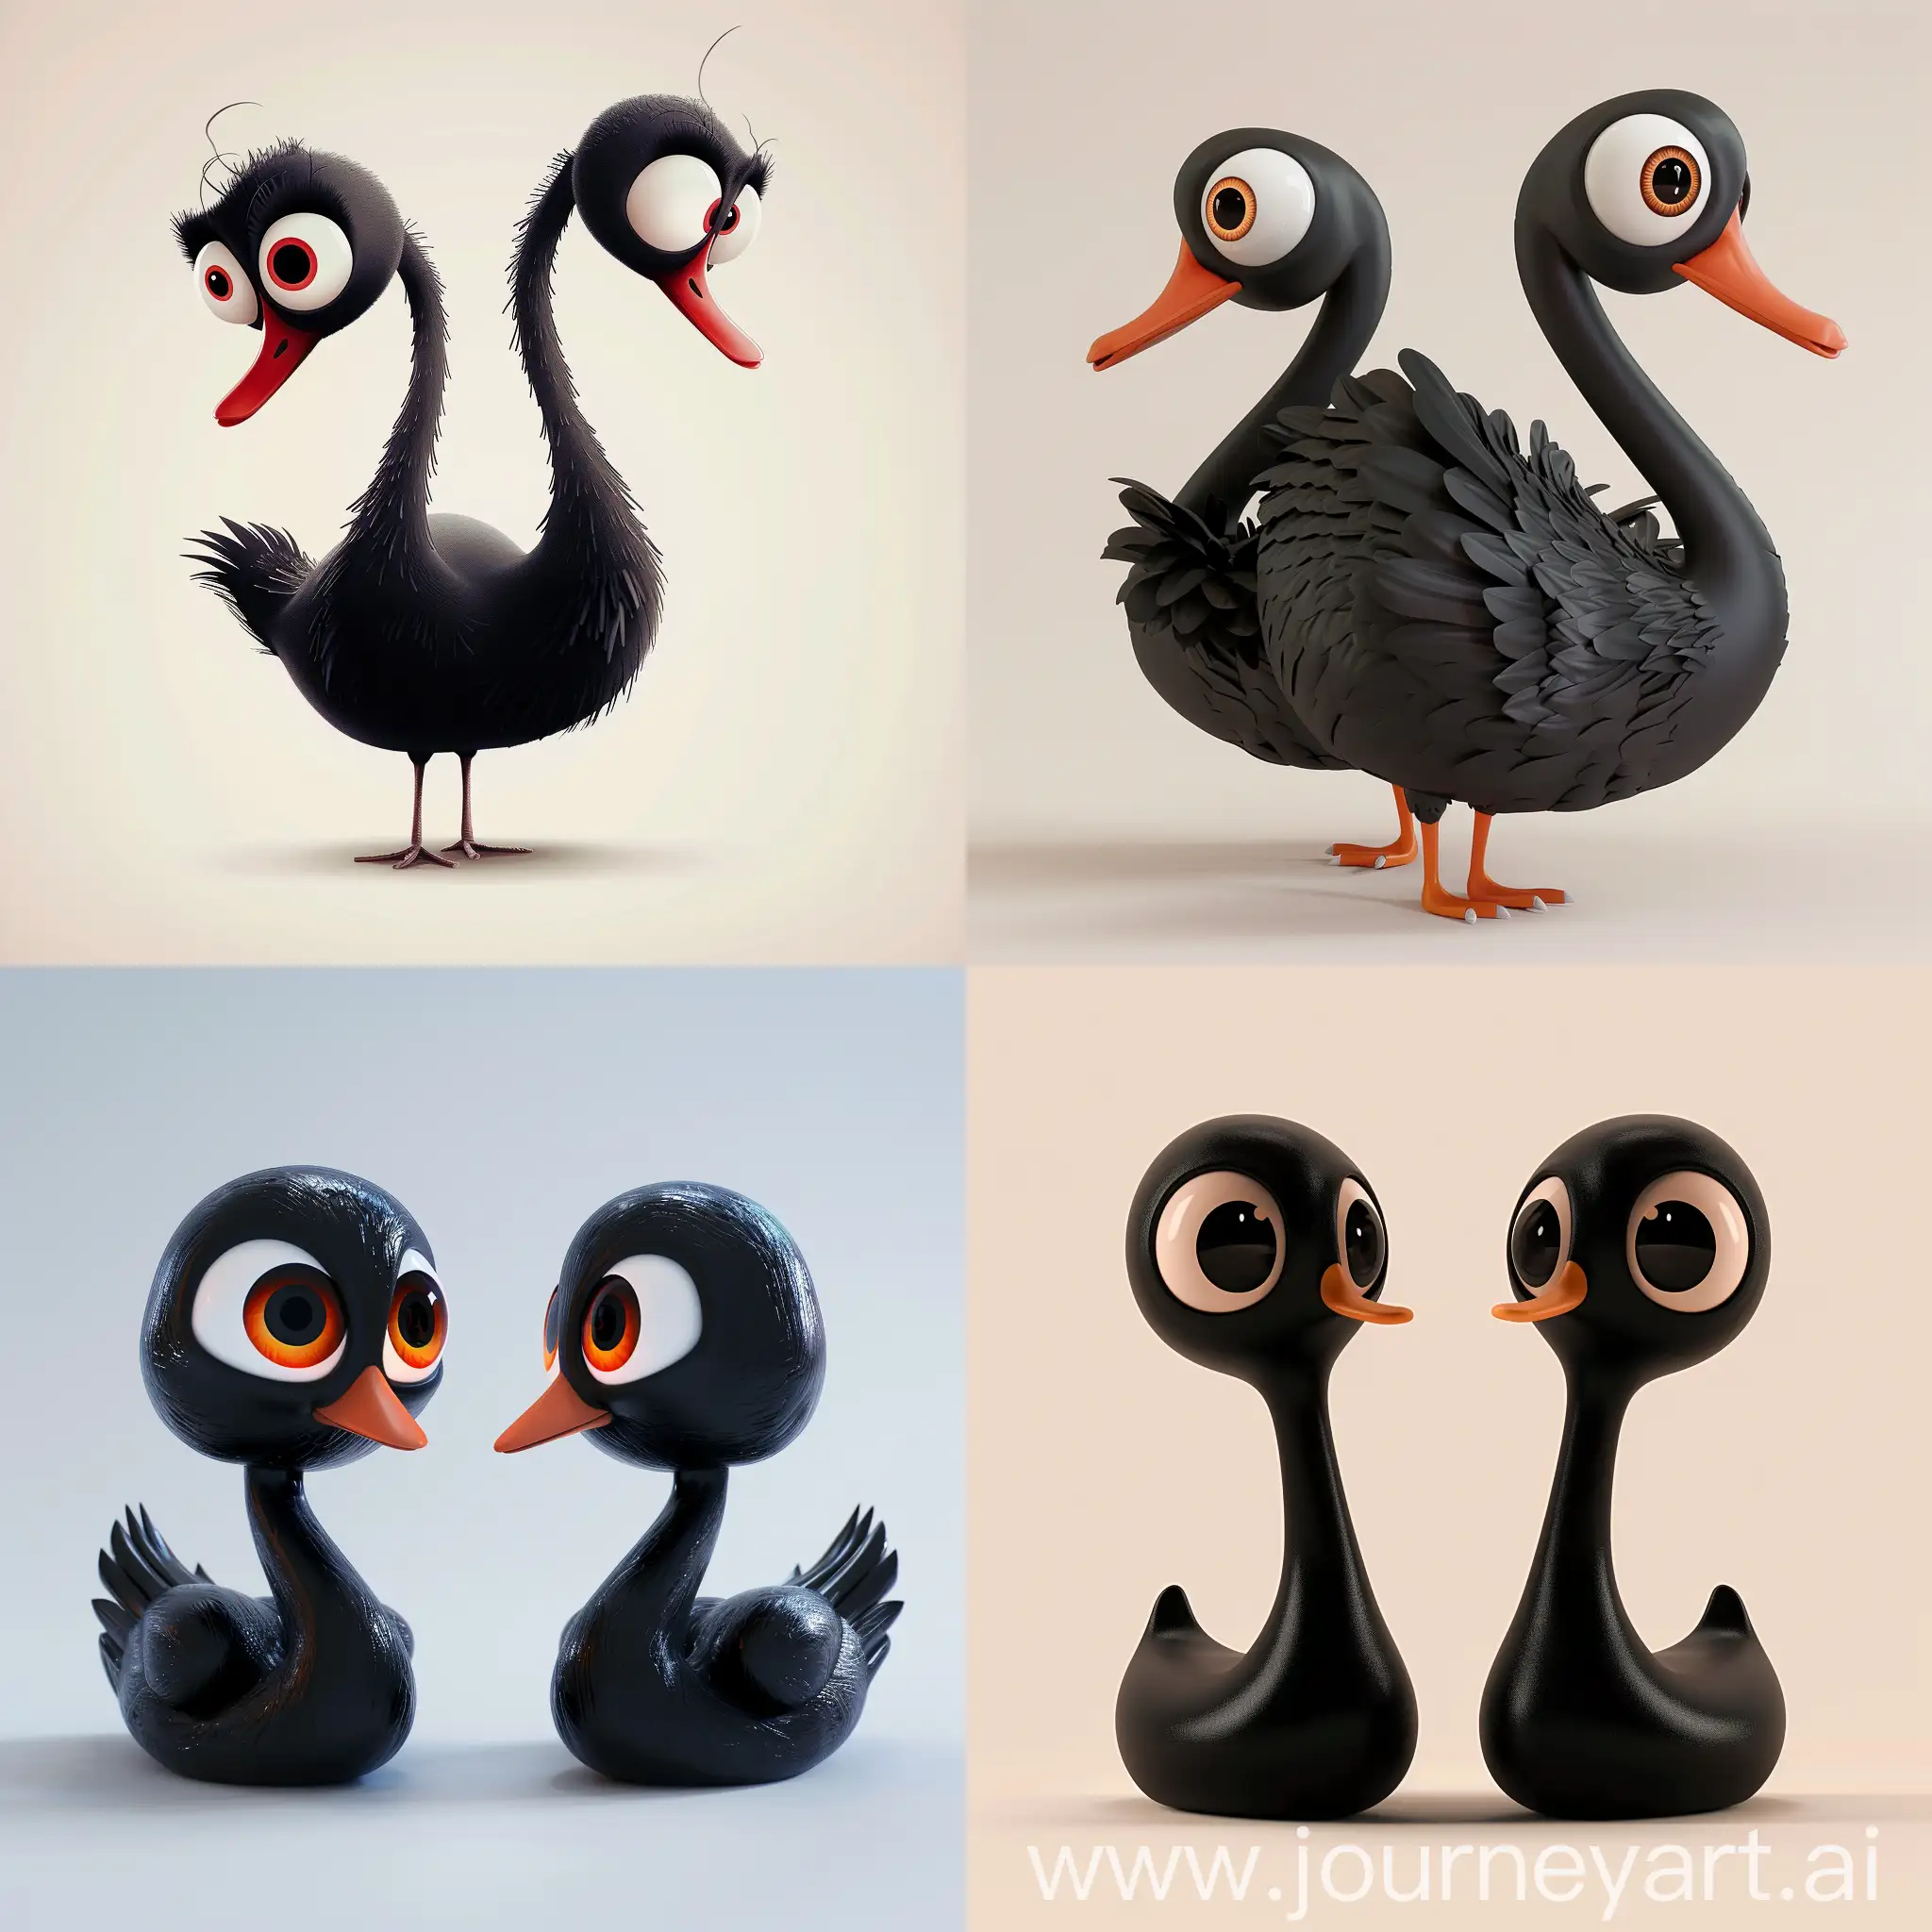 Symmetric-Black-Swan-with-Big-Evil-Eyes-Animation-on-Light-Background